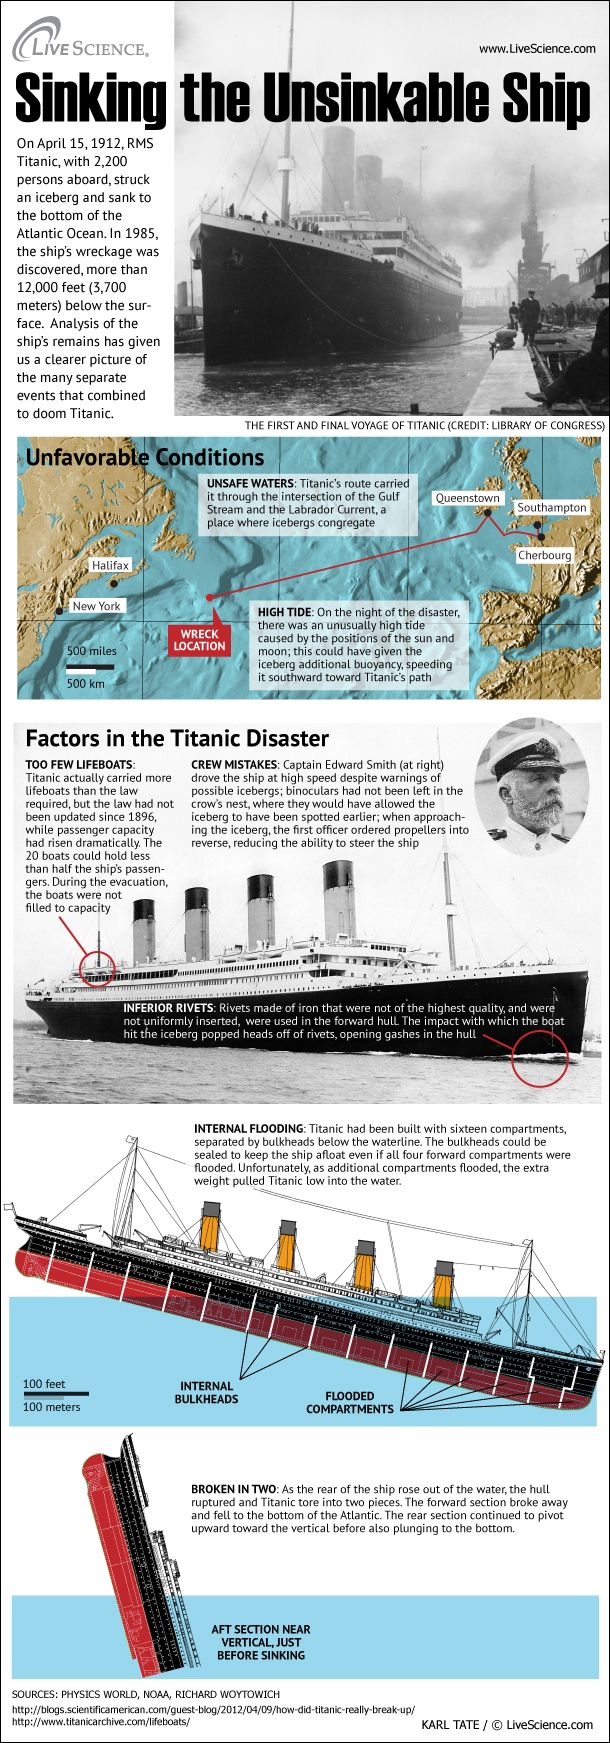 the economic impact of the titanic's sinking essay